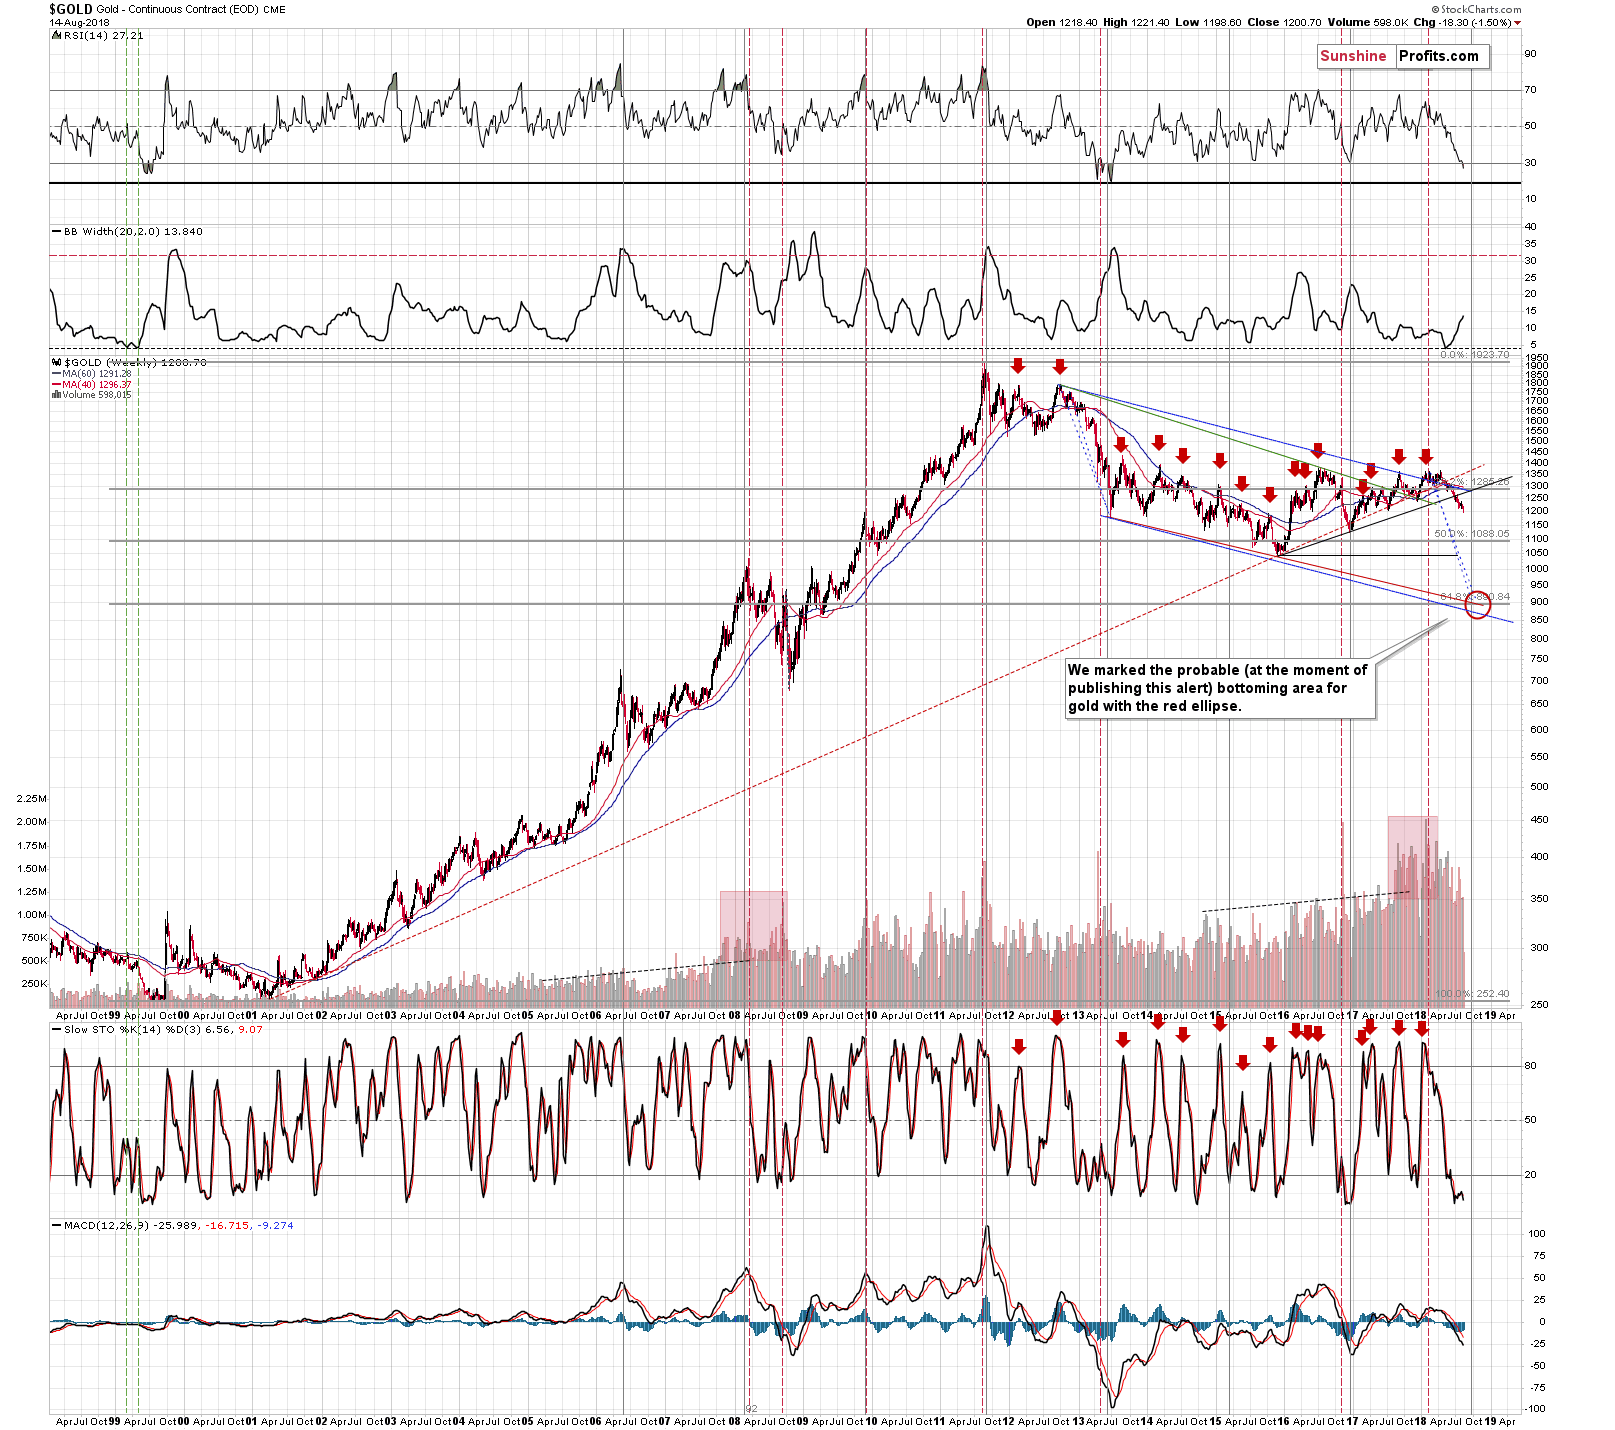 Gold long-term price chart - Gold price target